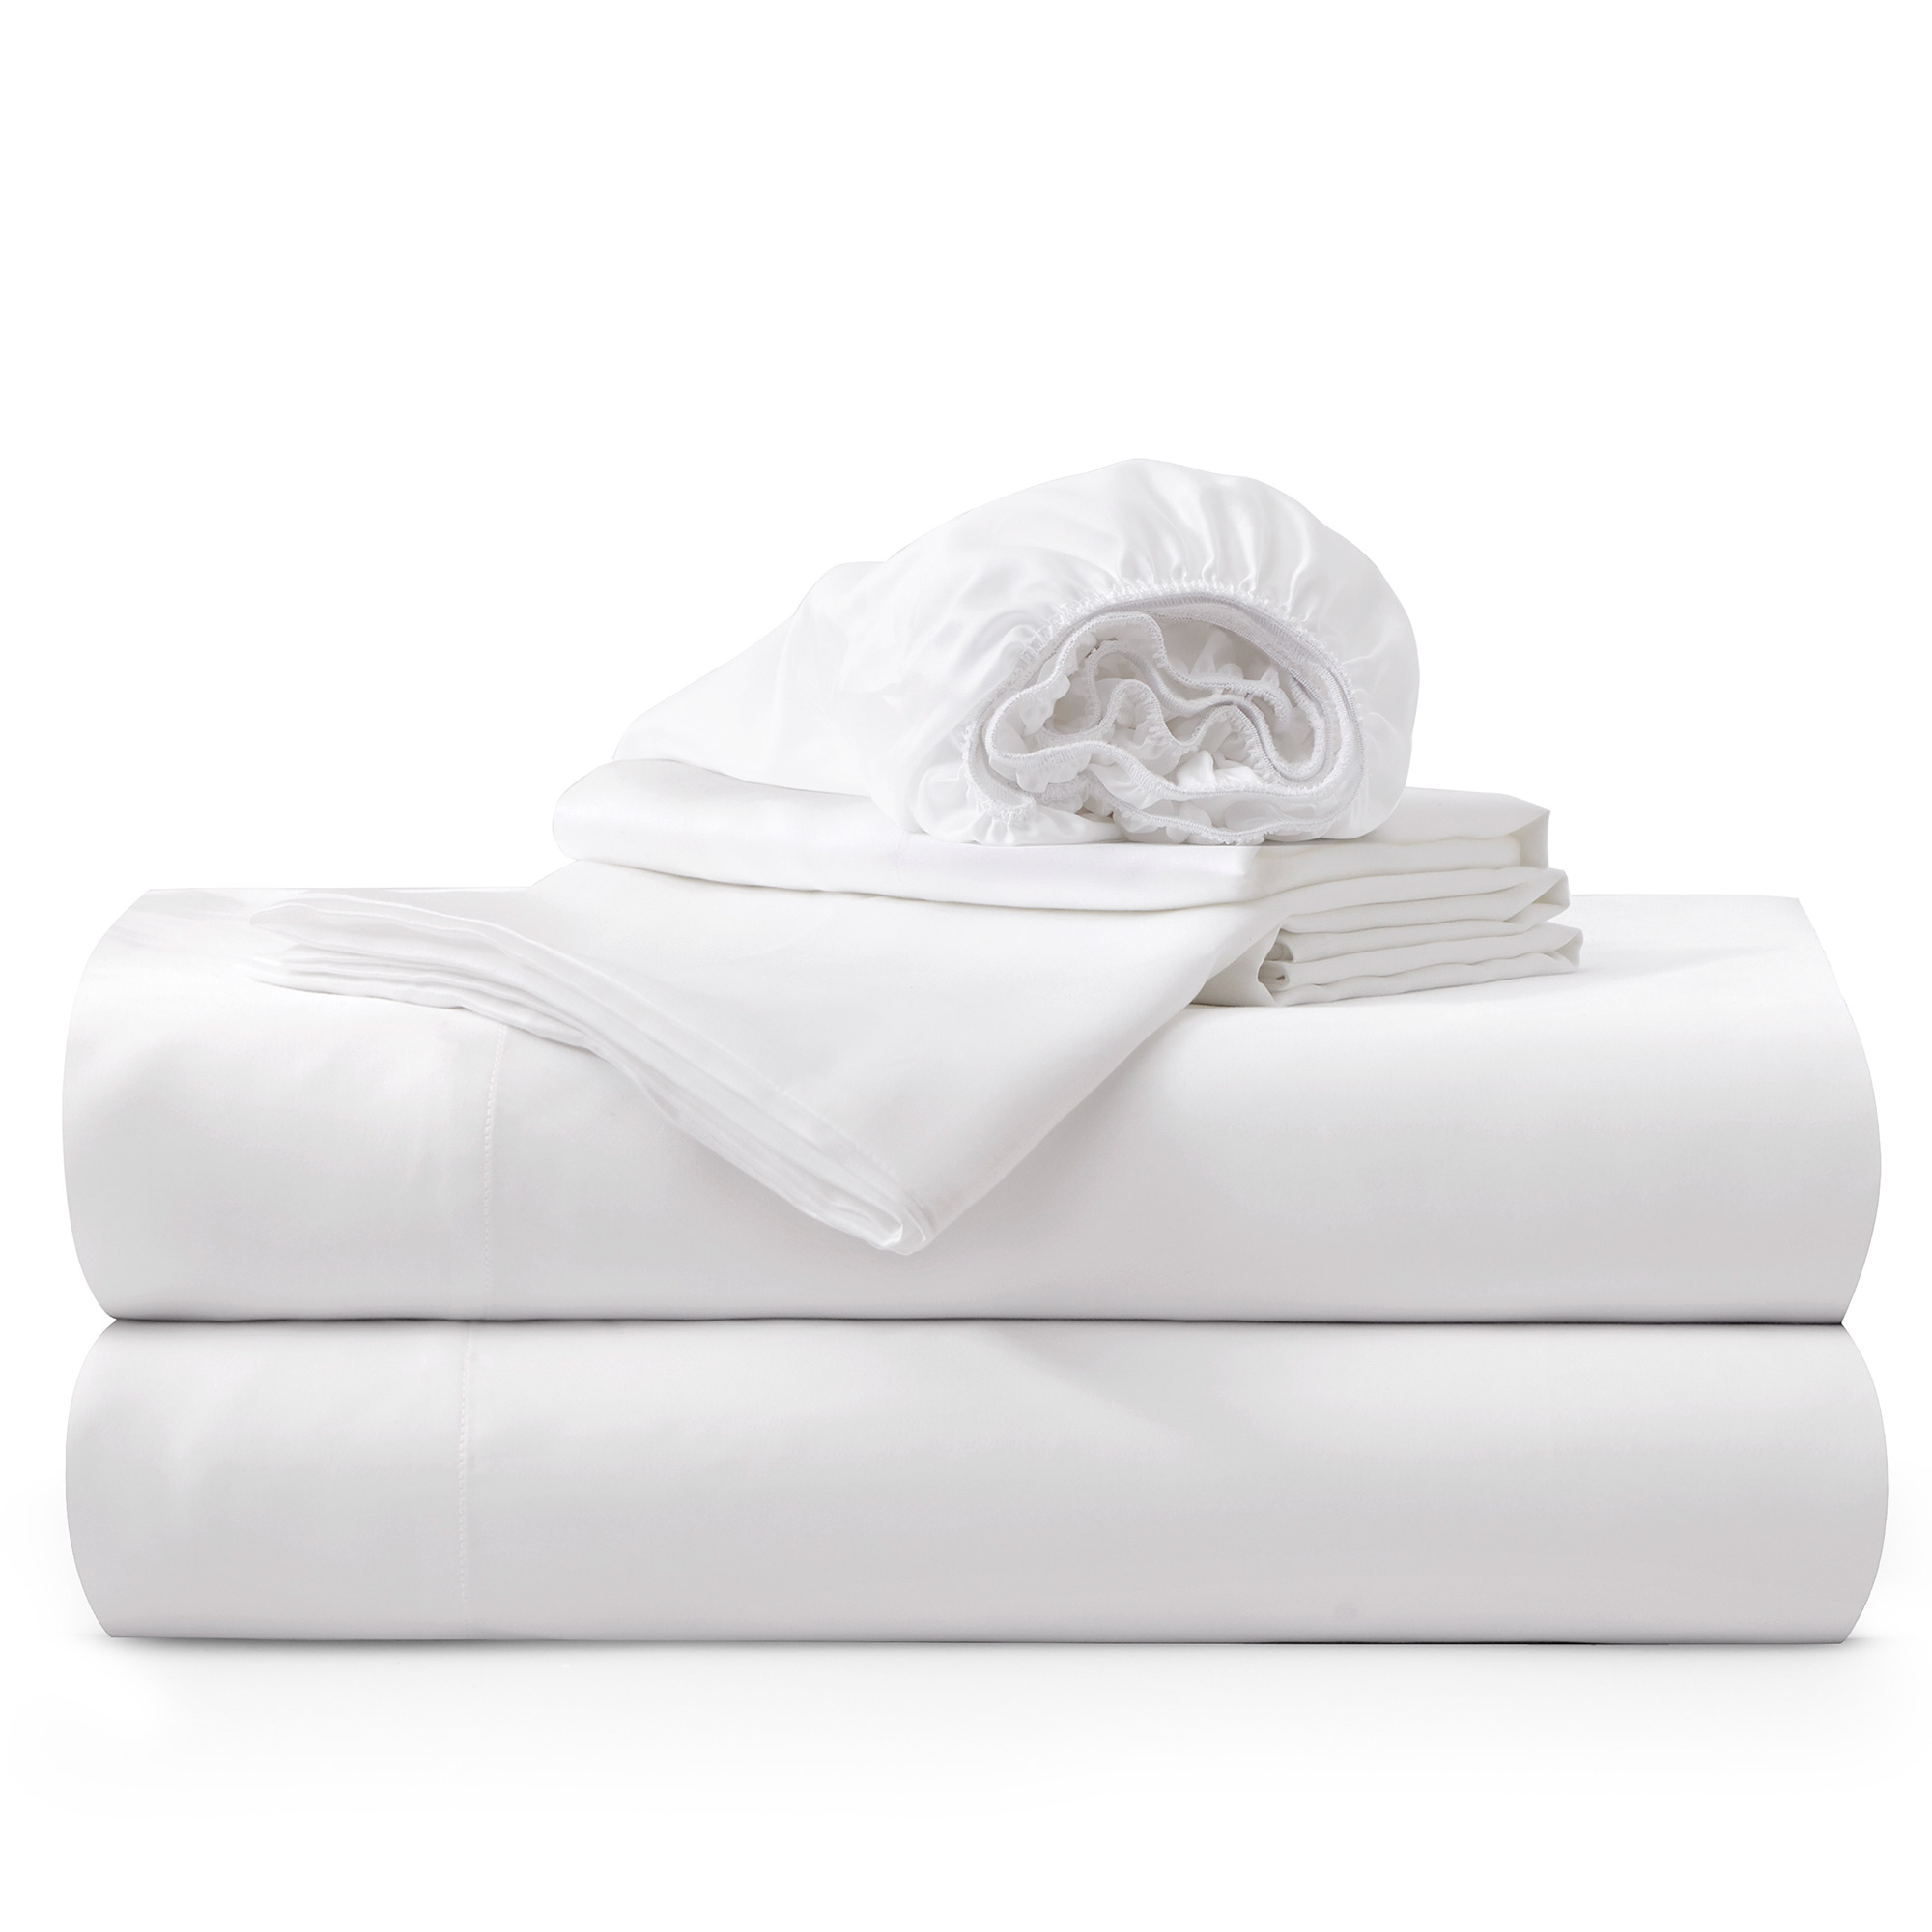 Silky Soft TENCELâ¢ Lyocell Cooling Sheet Set-Breathability And Moisture-wicking Bedding Set - Lucent White, Twin